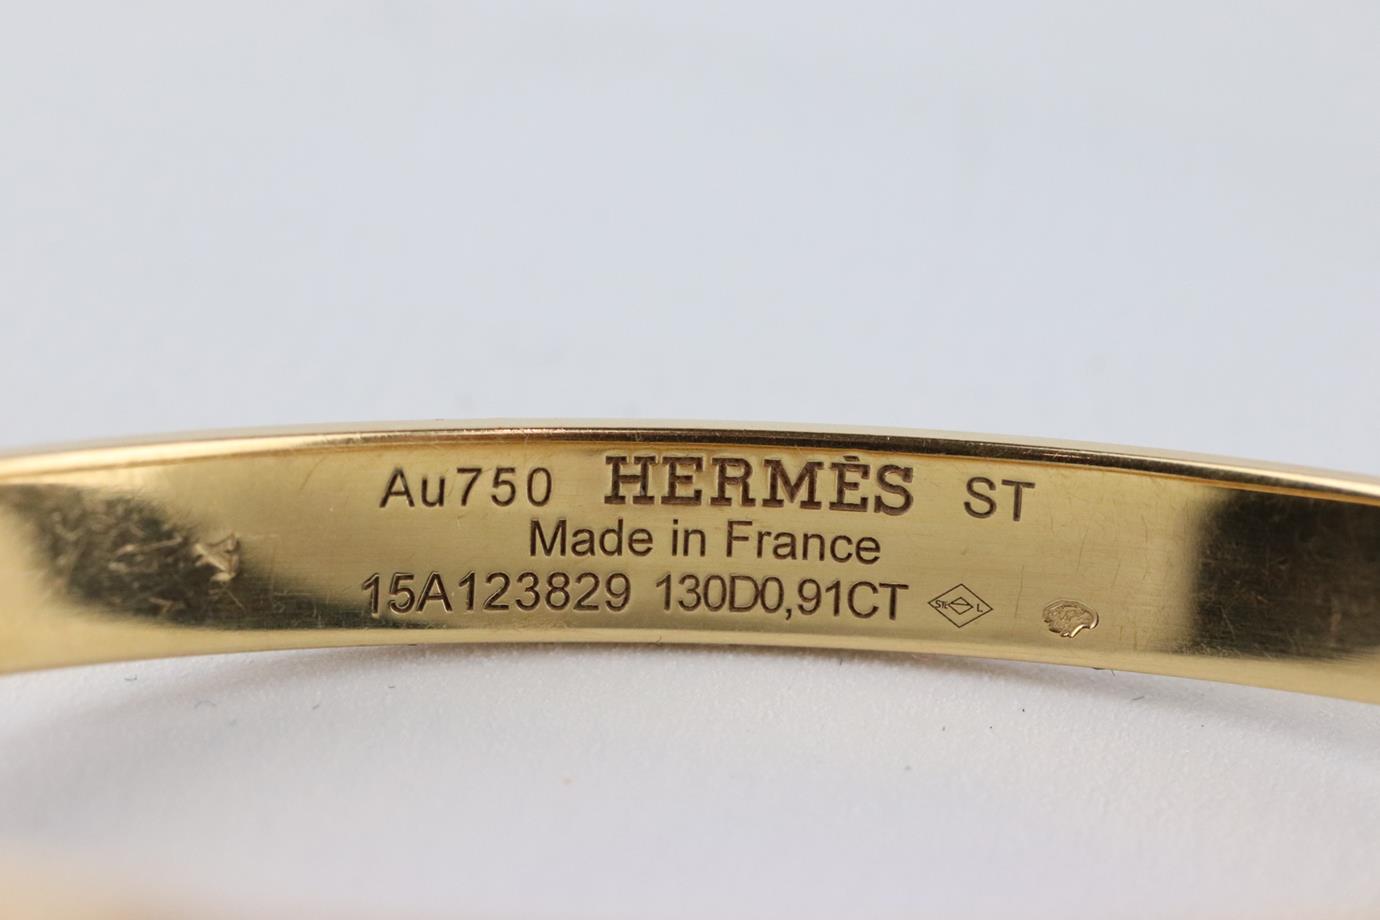 HERMÈS COLLIER DE CHIEN SMALL 18K YELLOW GOLD DIAMOND BRACELET